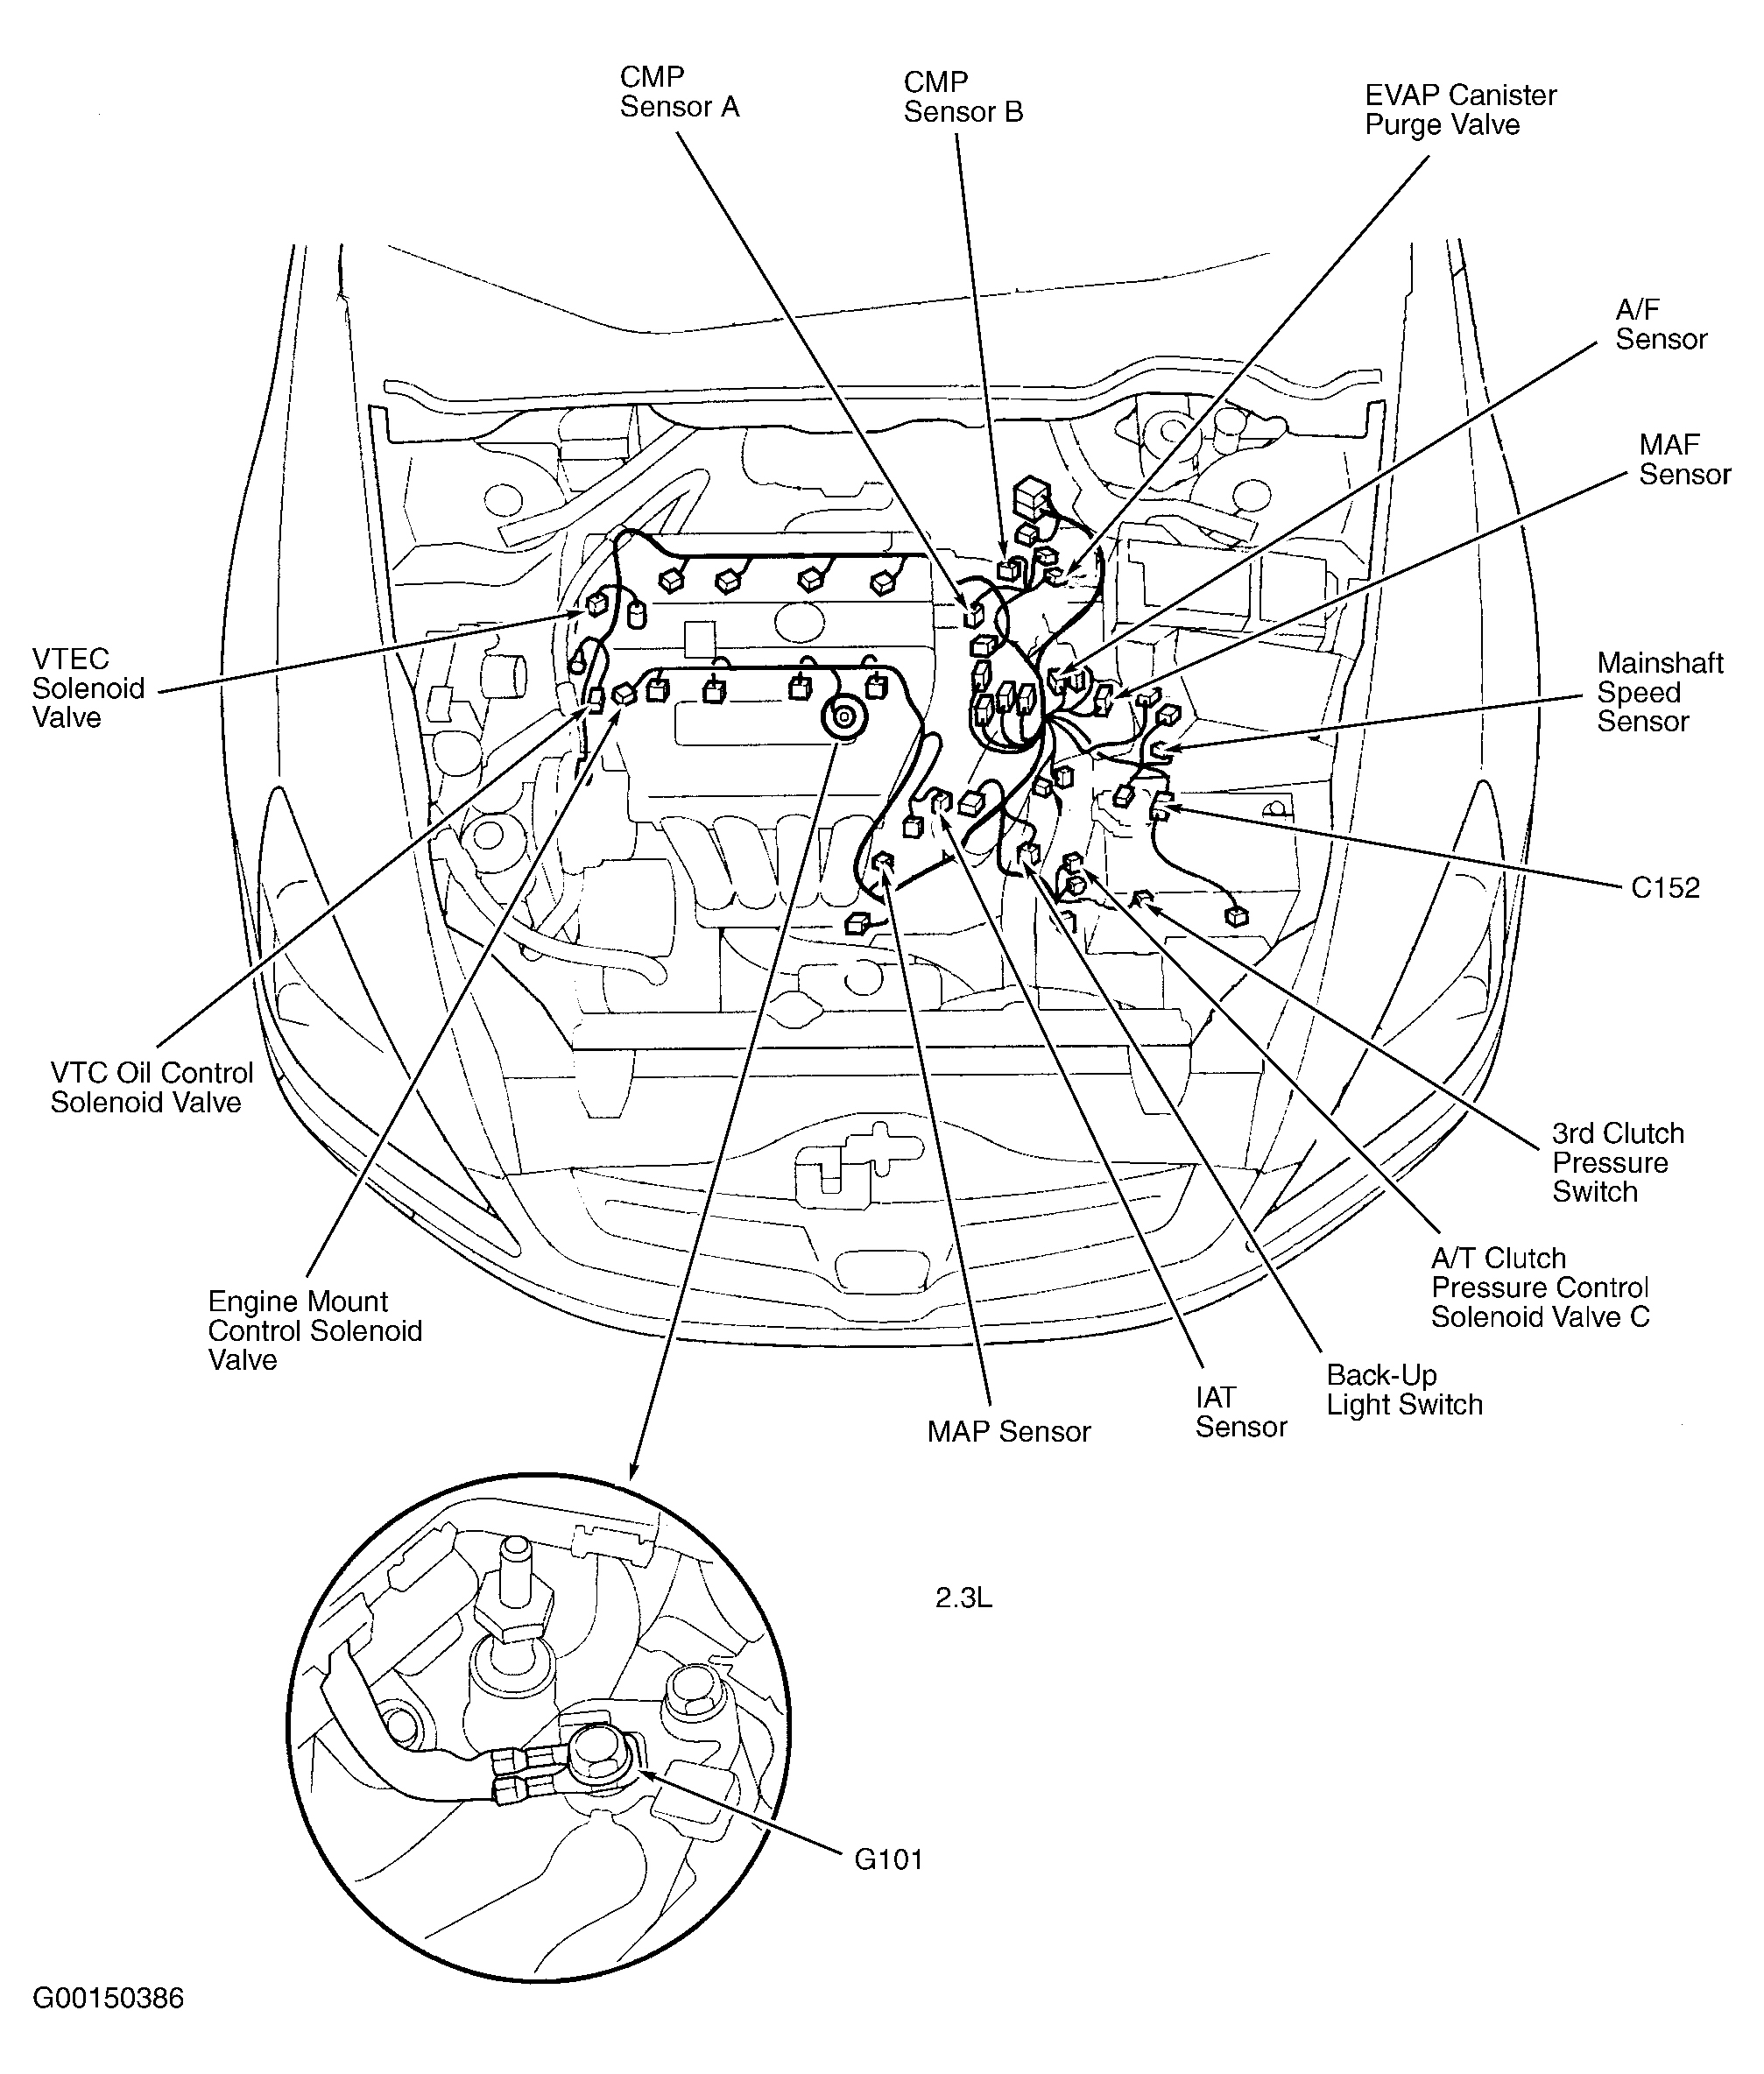 Honda Accord DX 2003 - Component Locations -  Engine Compartment (2.4L)